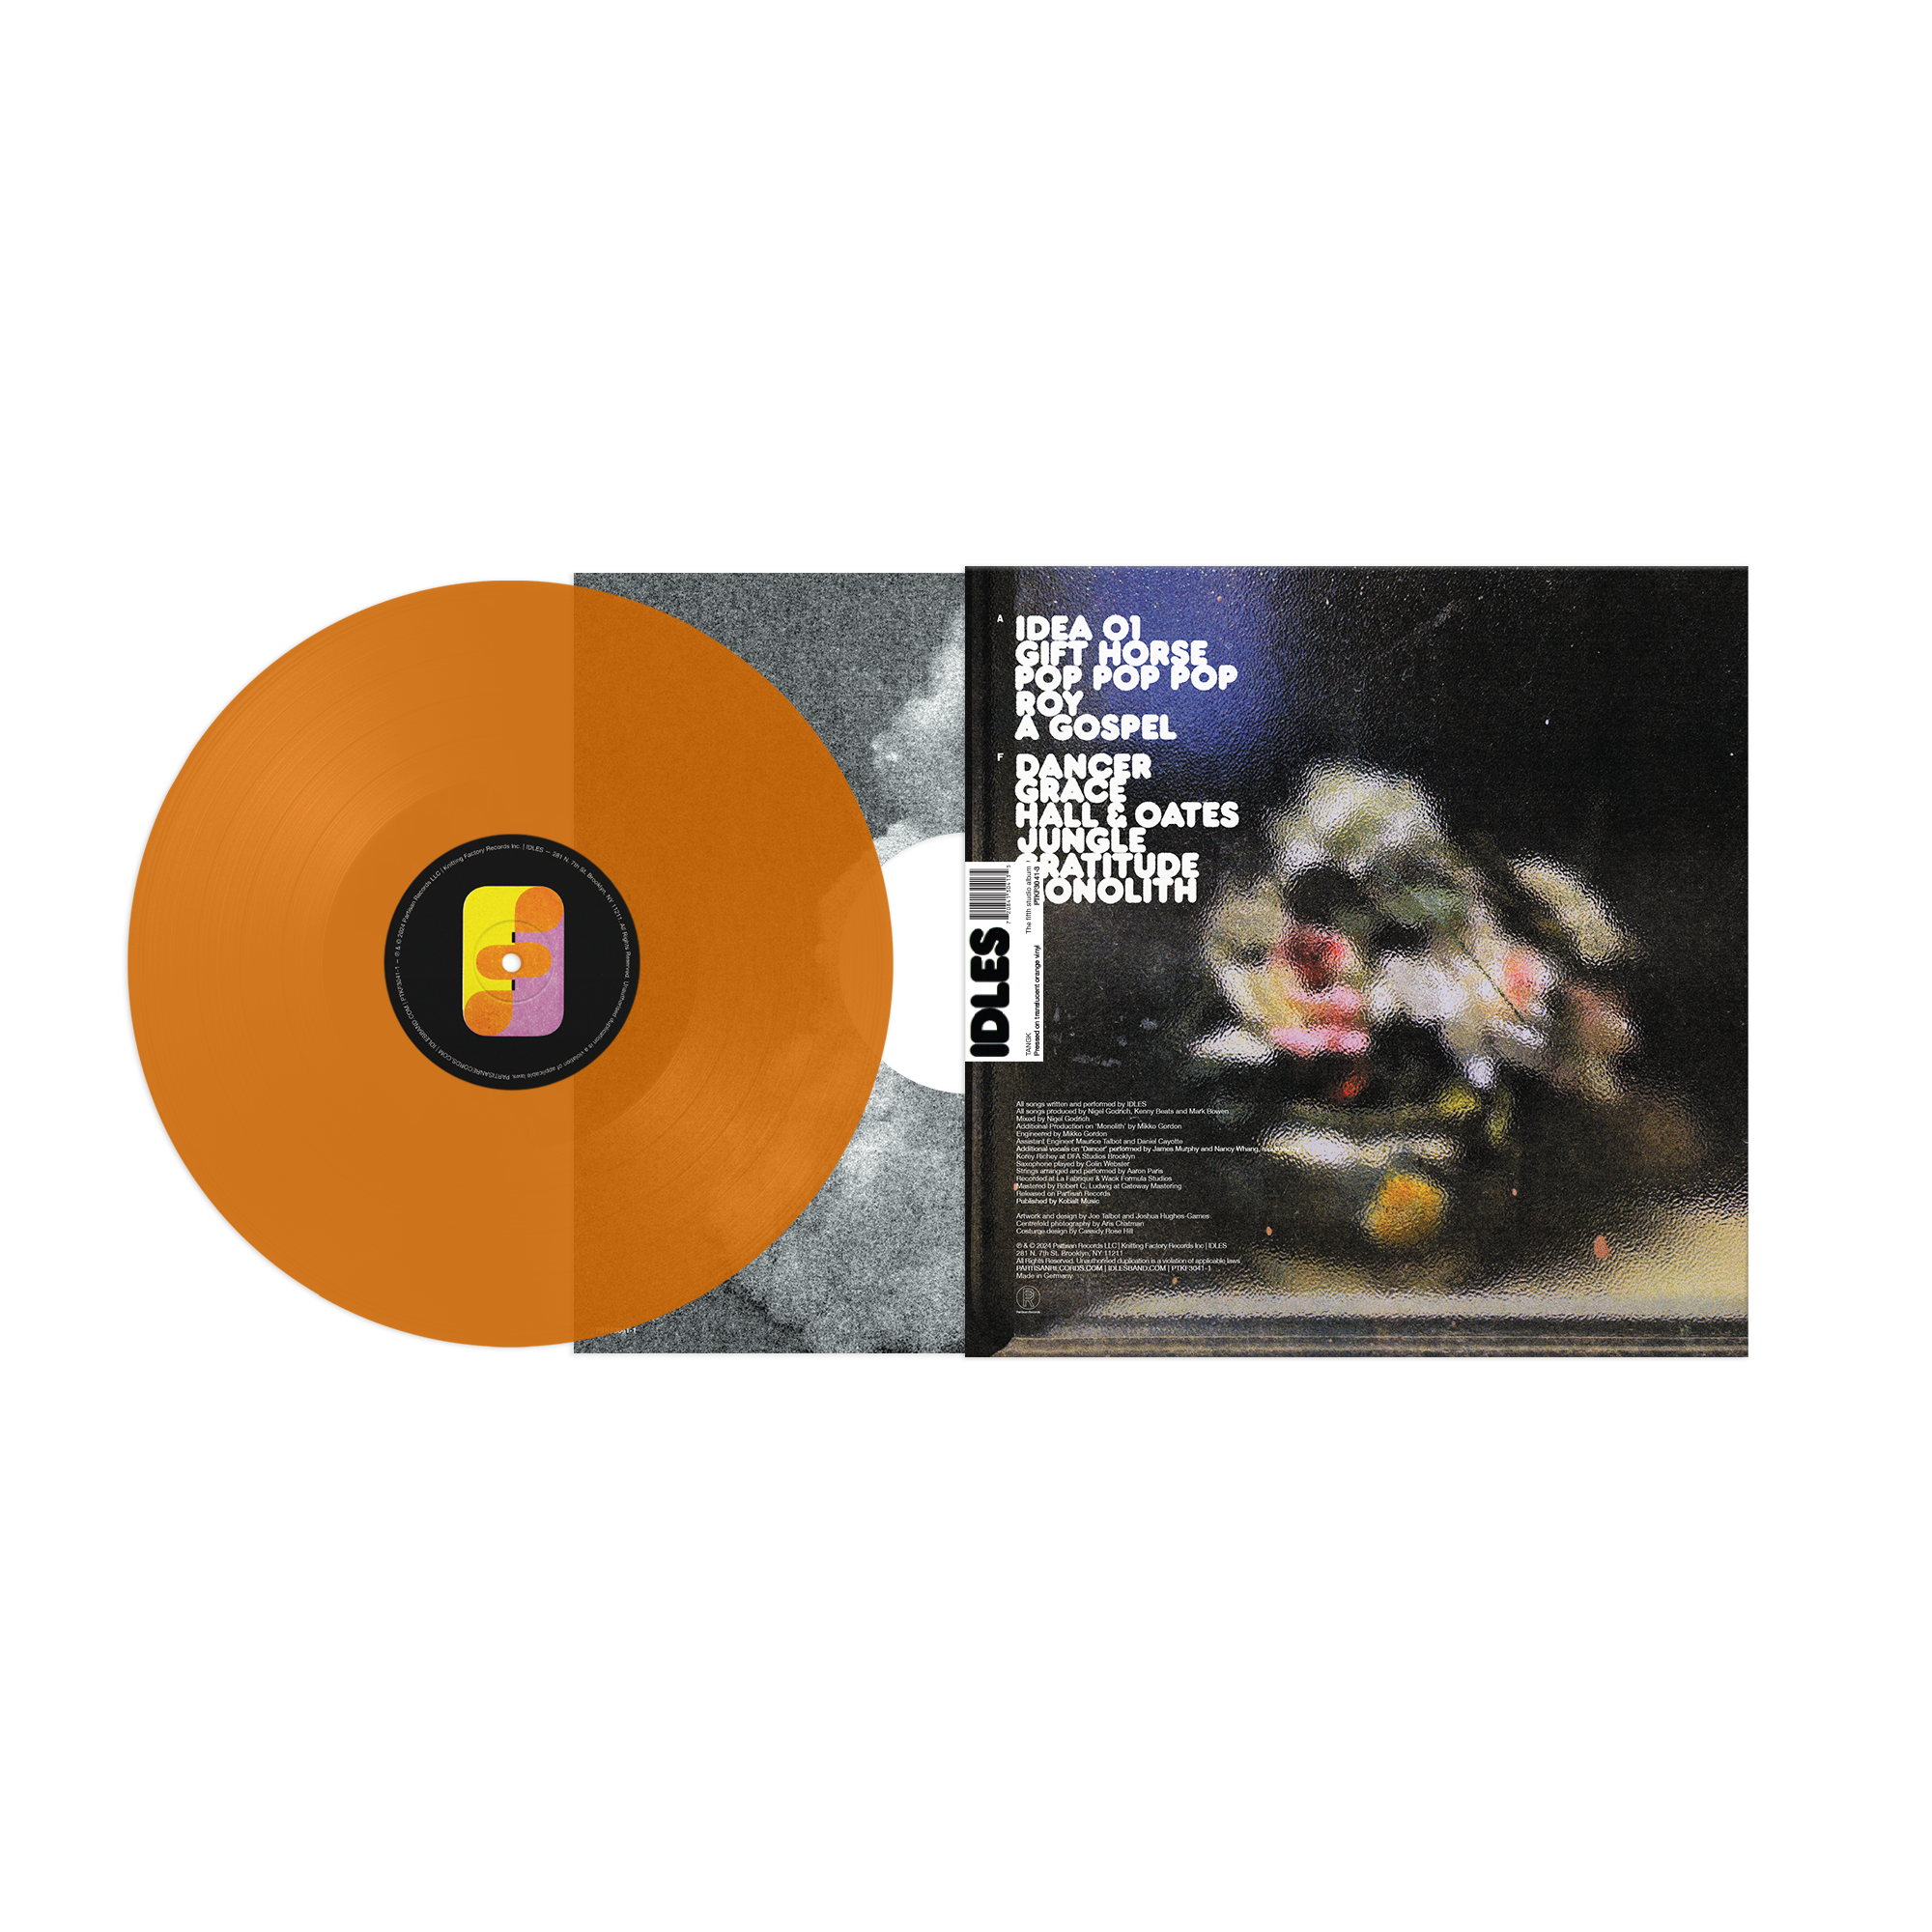 IDLES - TANGK (Limited Edition Translucent Orange LP)